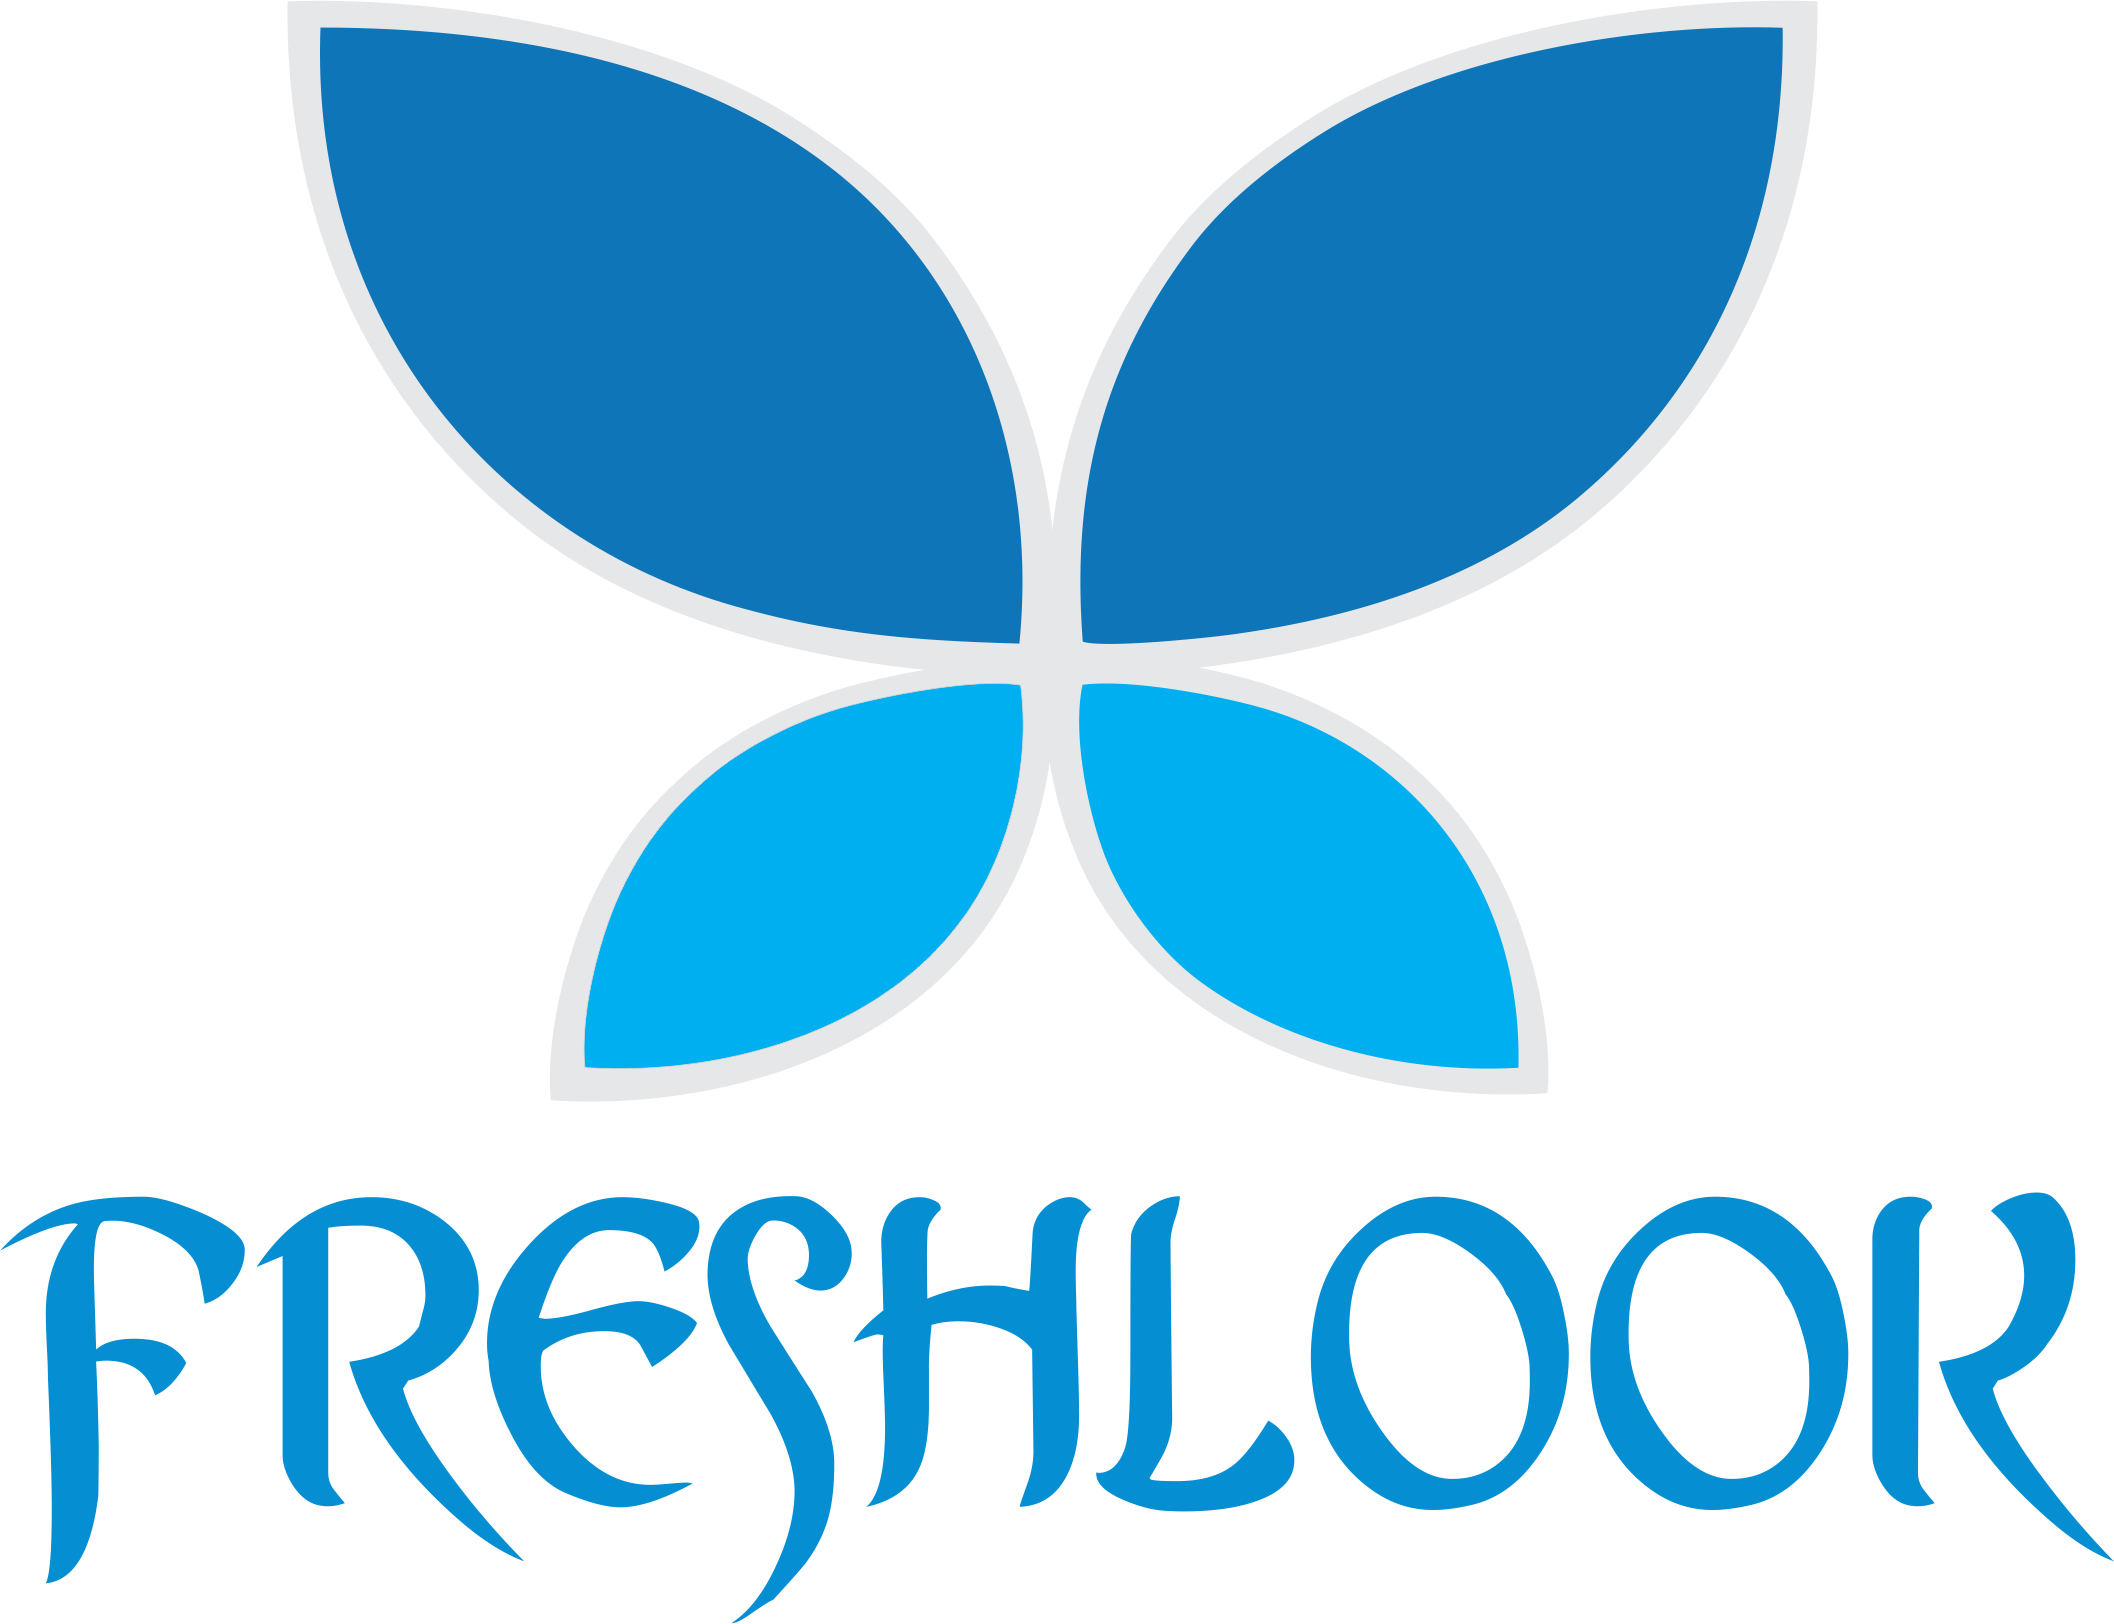 FRESHLOOK logo. FRESHLOOK logo PNG.